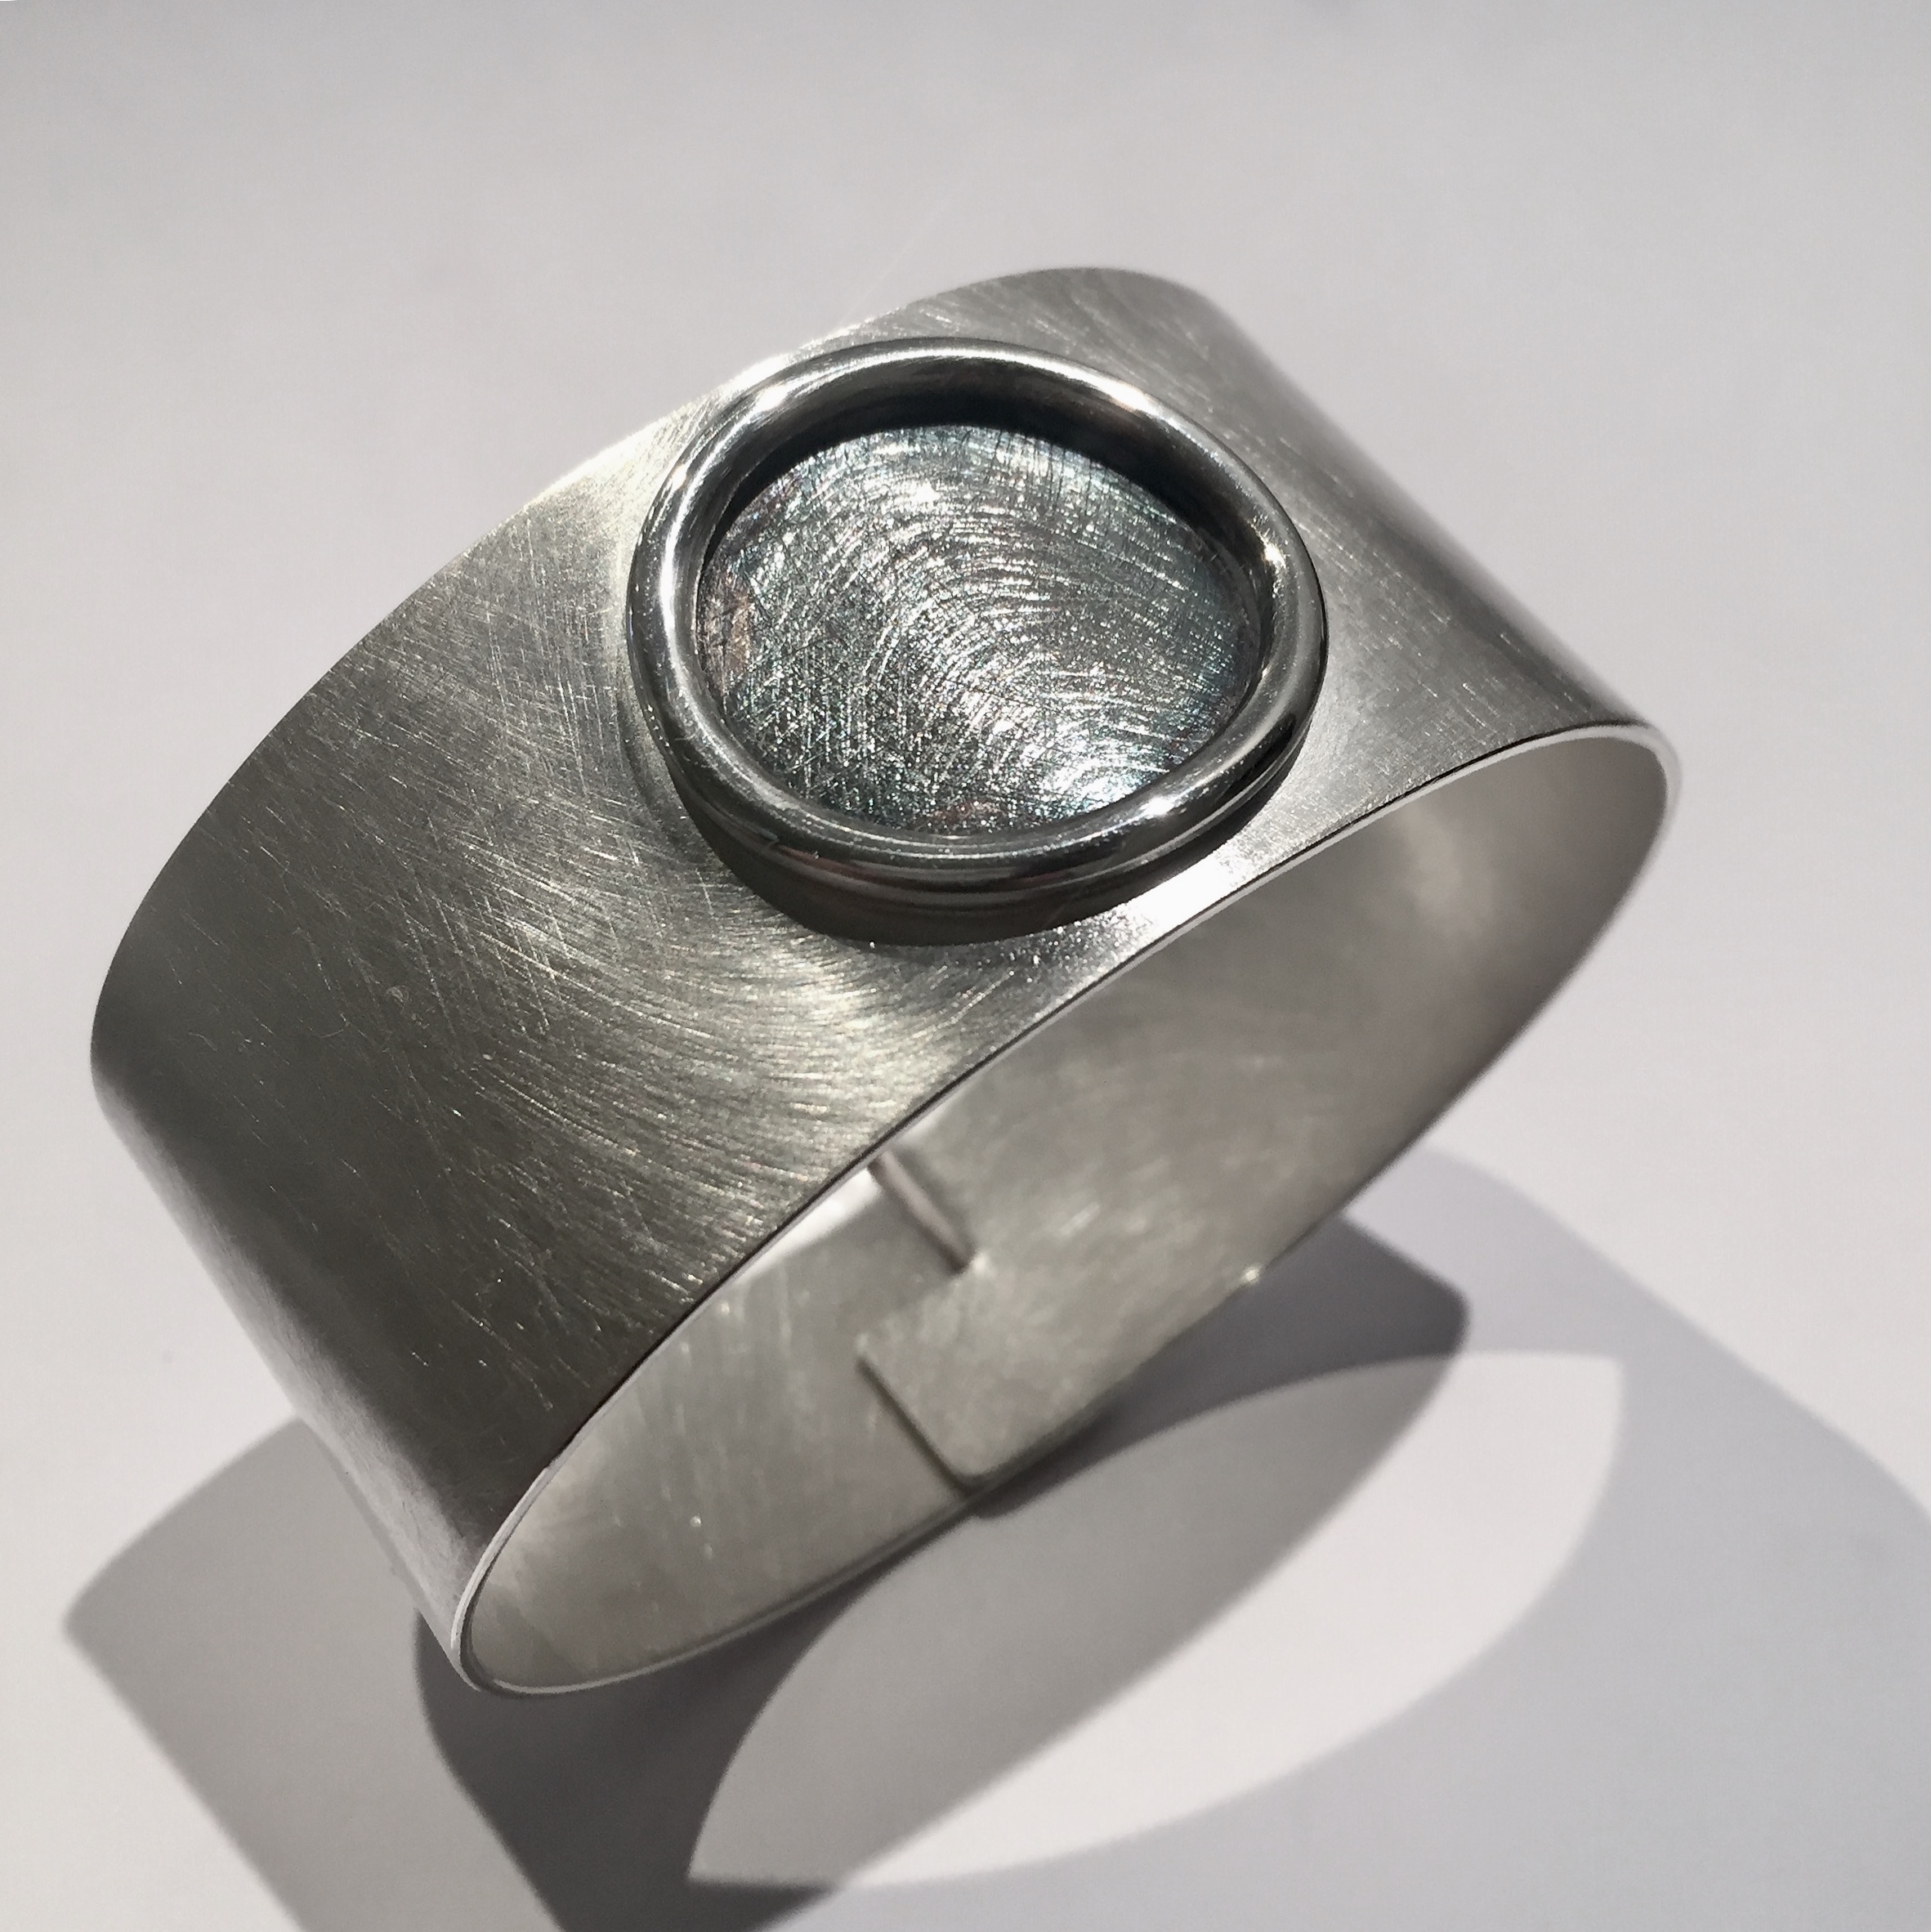 rijm Sociaal niettemin Brede zilveren armband - Laloli sieraden - Blikvanger